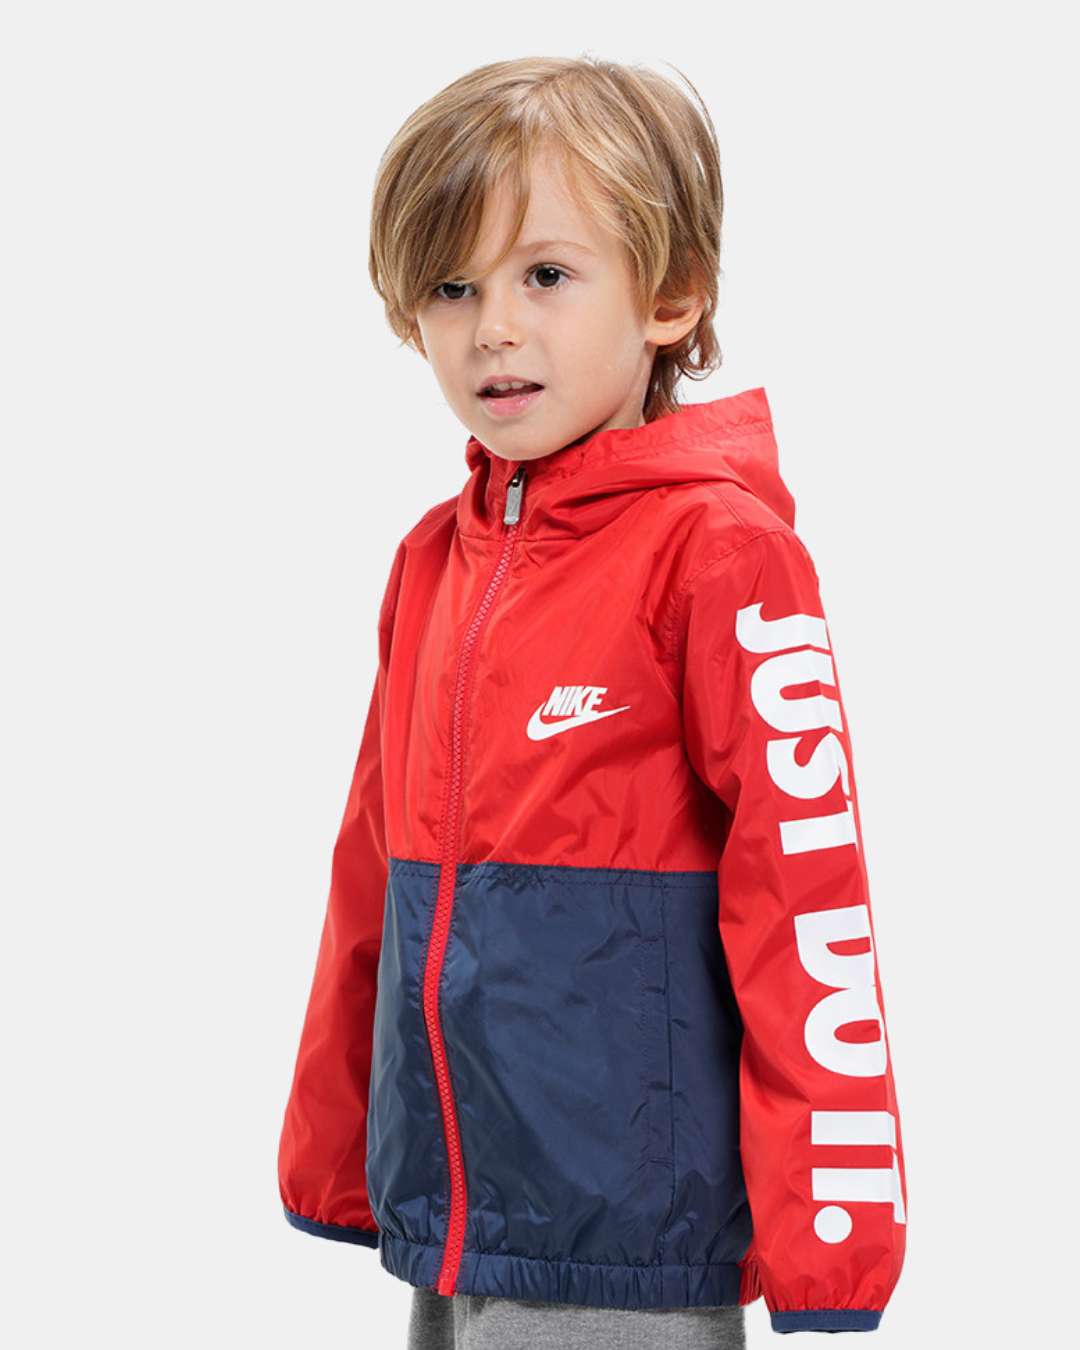 Giacca Nike Bambini - Rossa